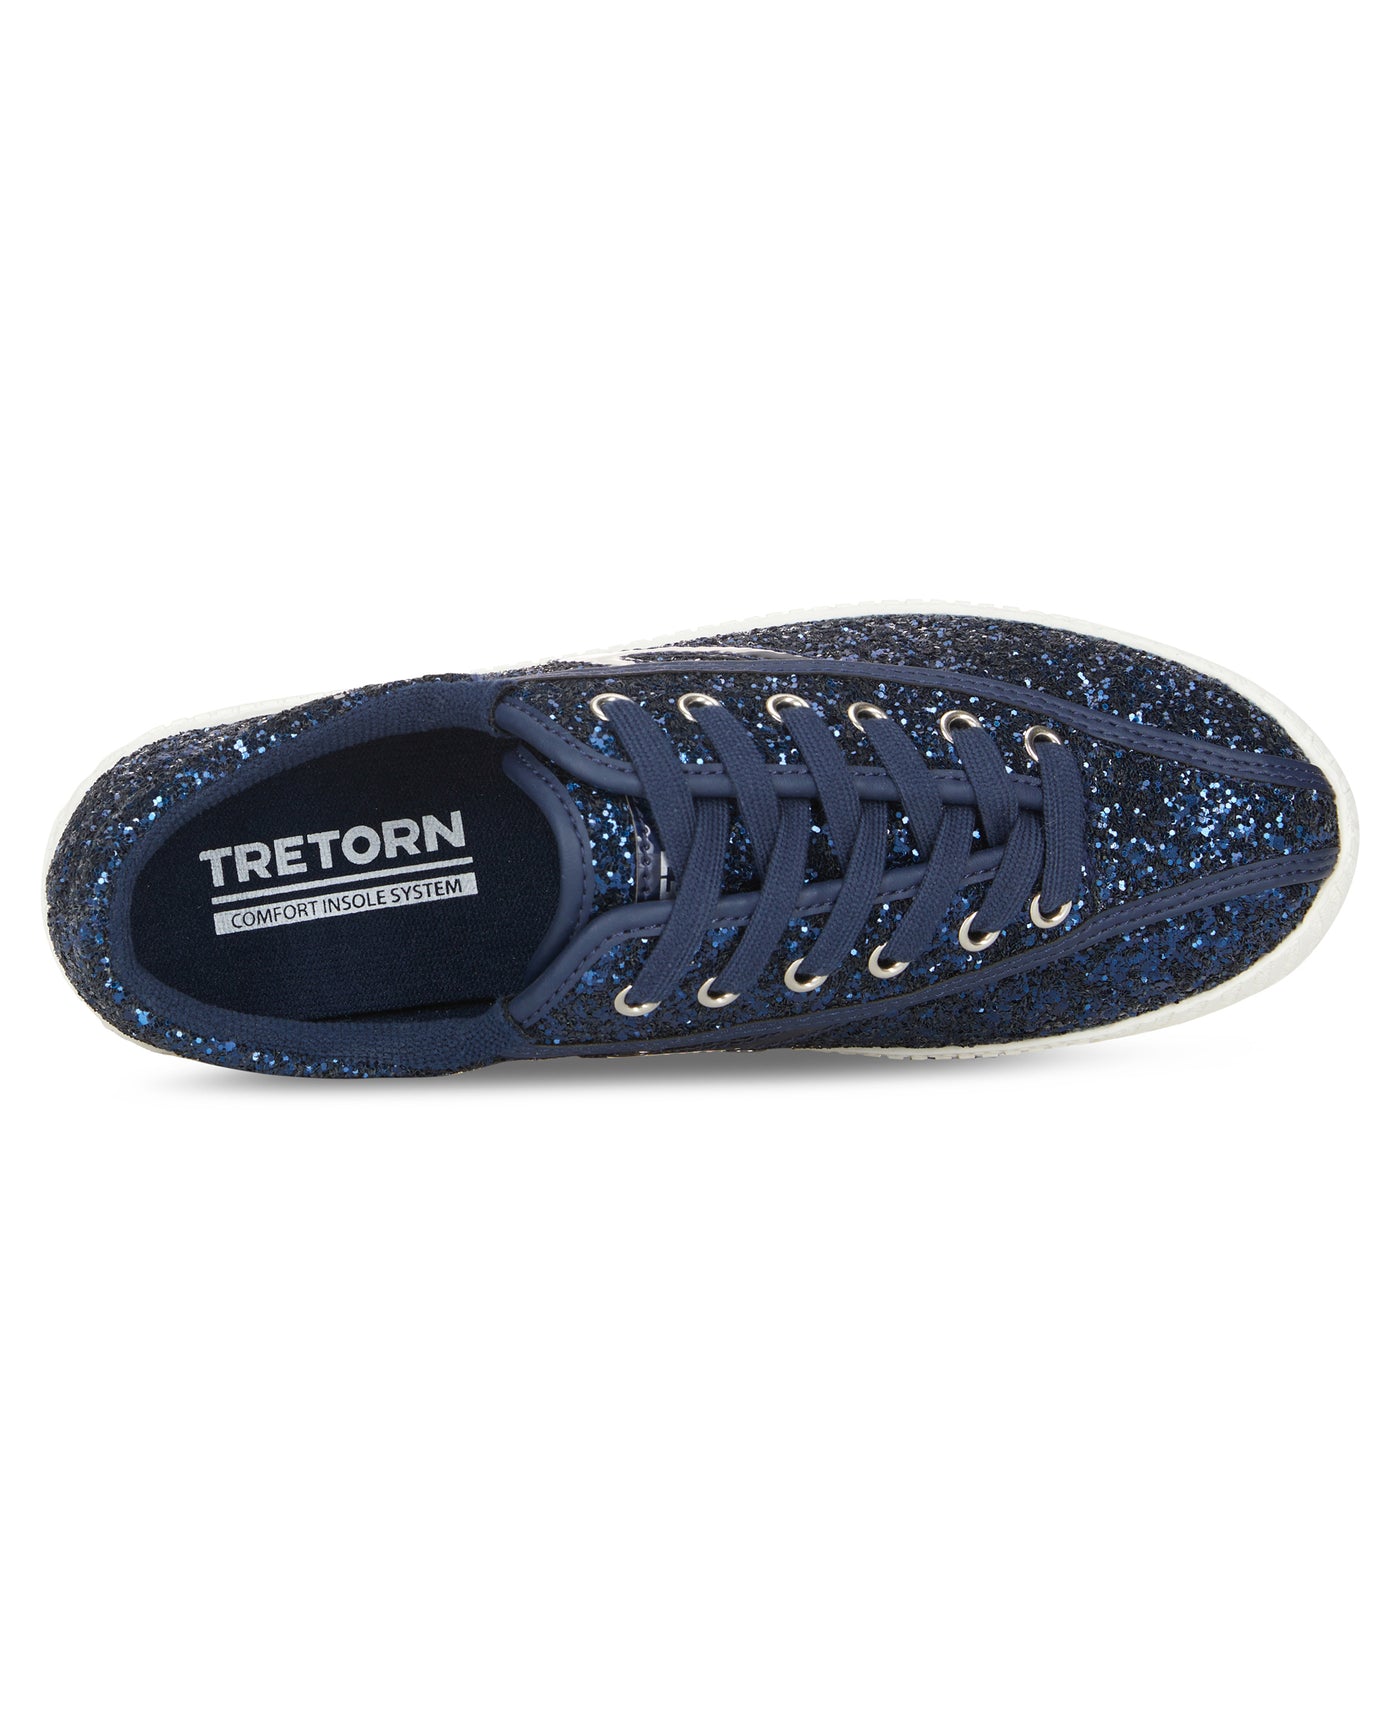 Tretorn Women's Sneakers Nylite Glitter Navy